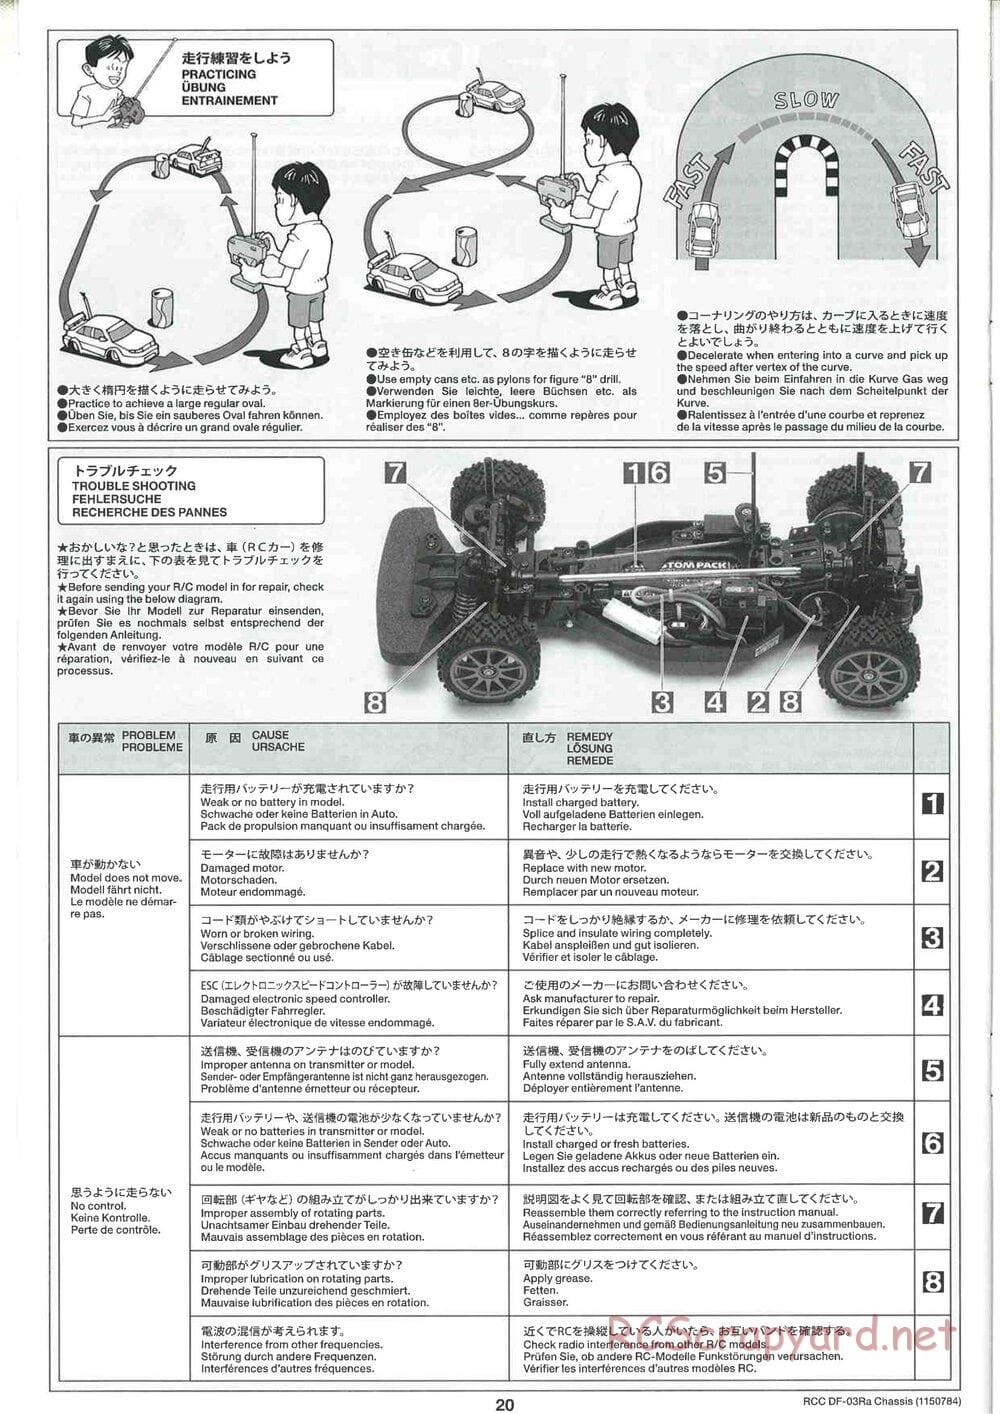 Tamiya - DF-03Ra Chassis - Manual - Page 20